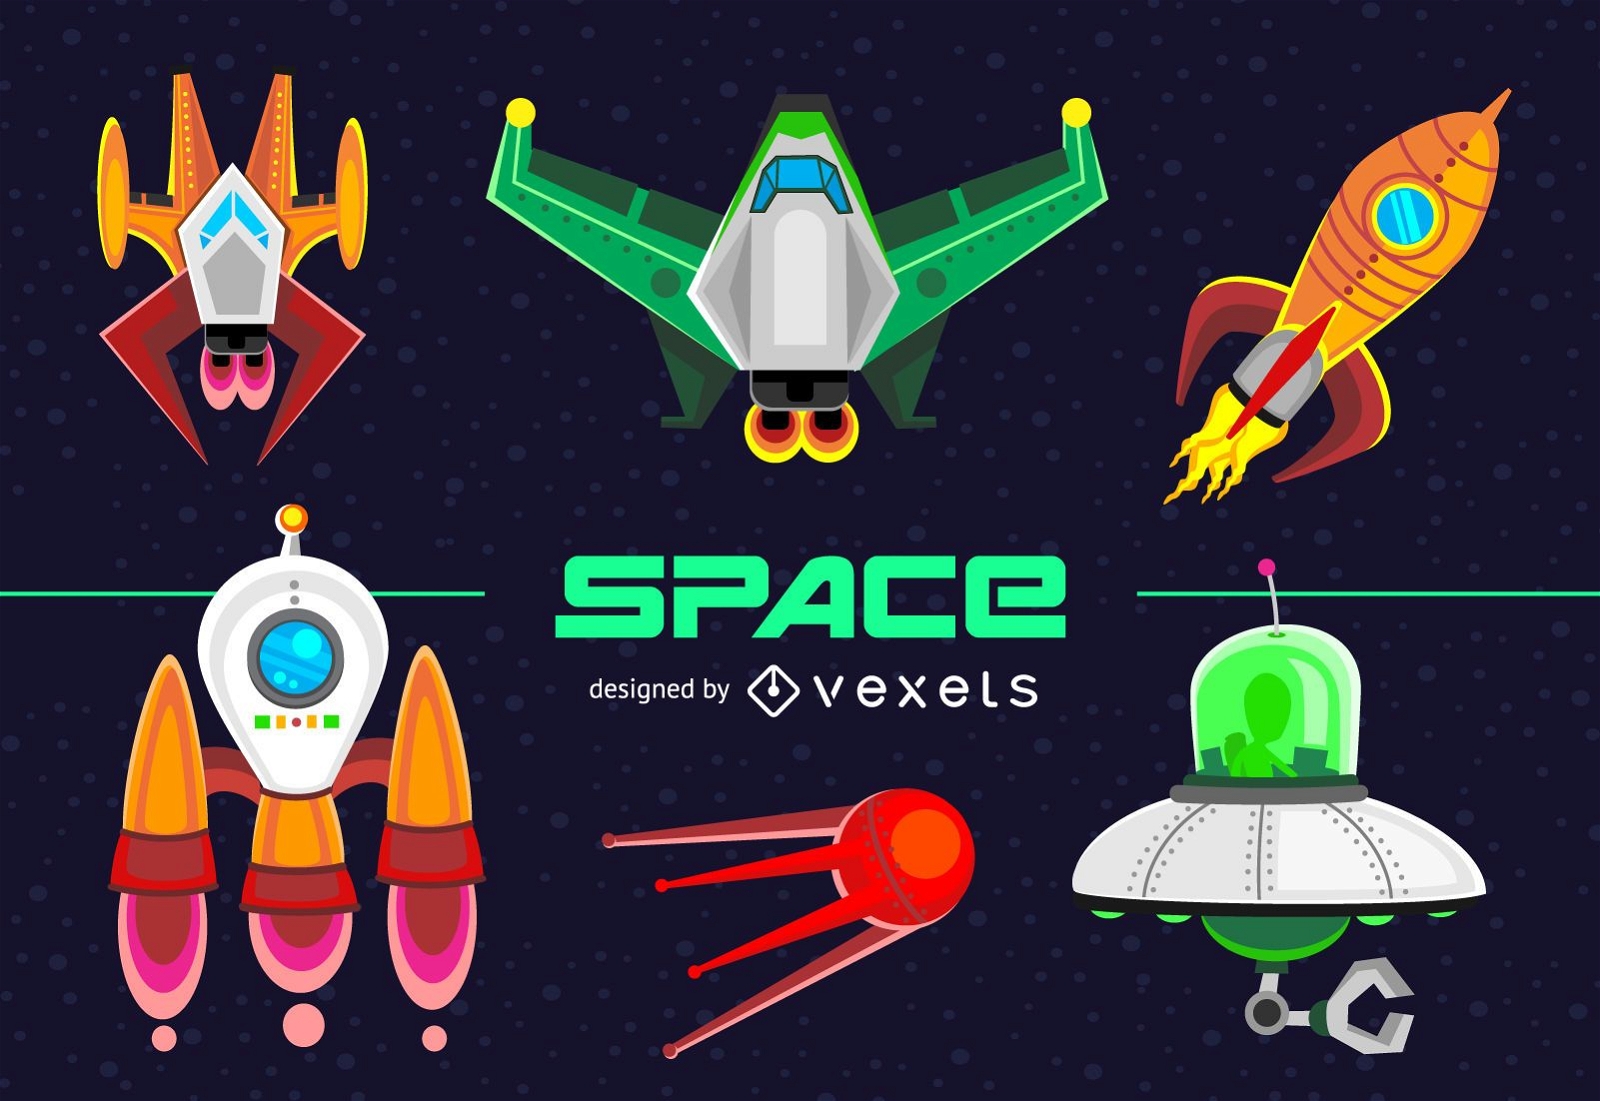 Spacecraft and spaceship illustration set